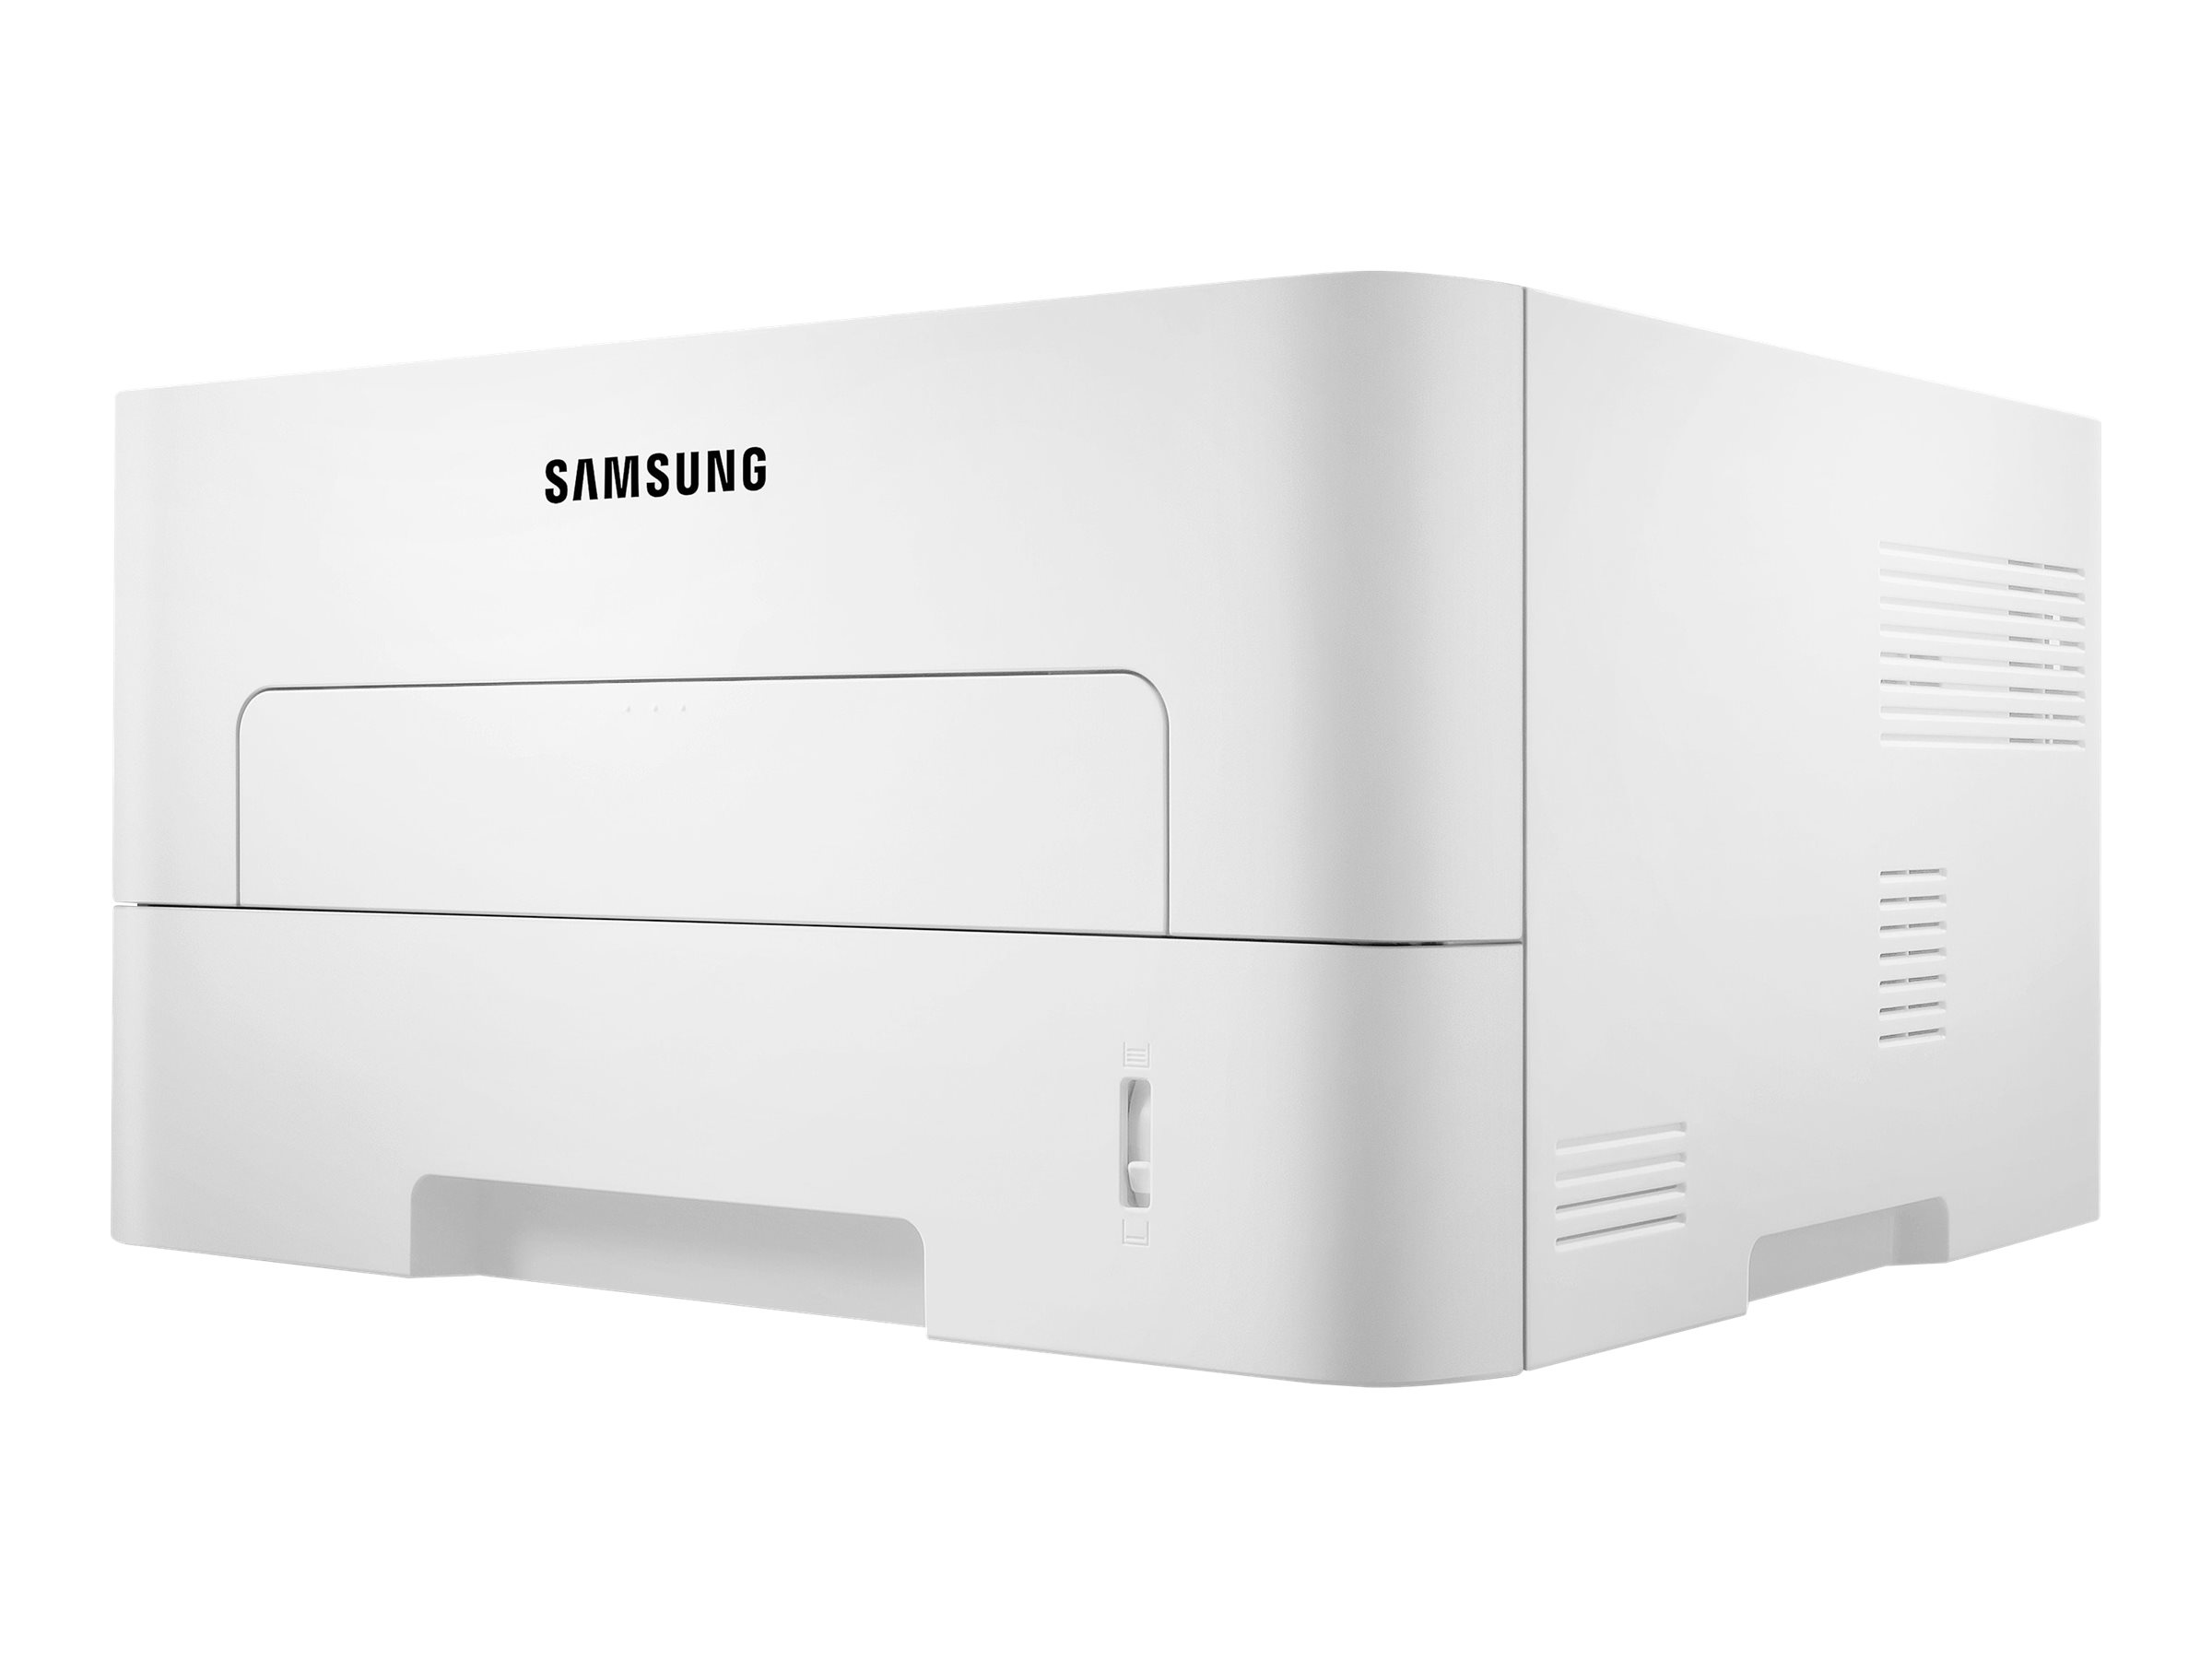 Samsung Xpress SL-M2625 Laser Printer series